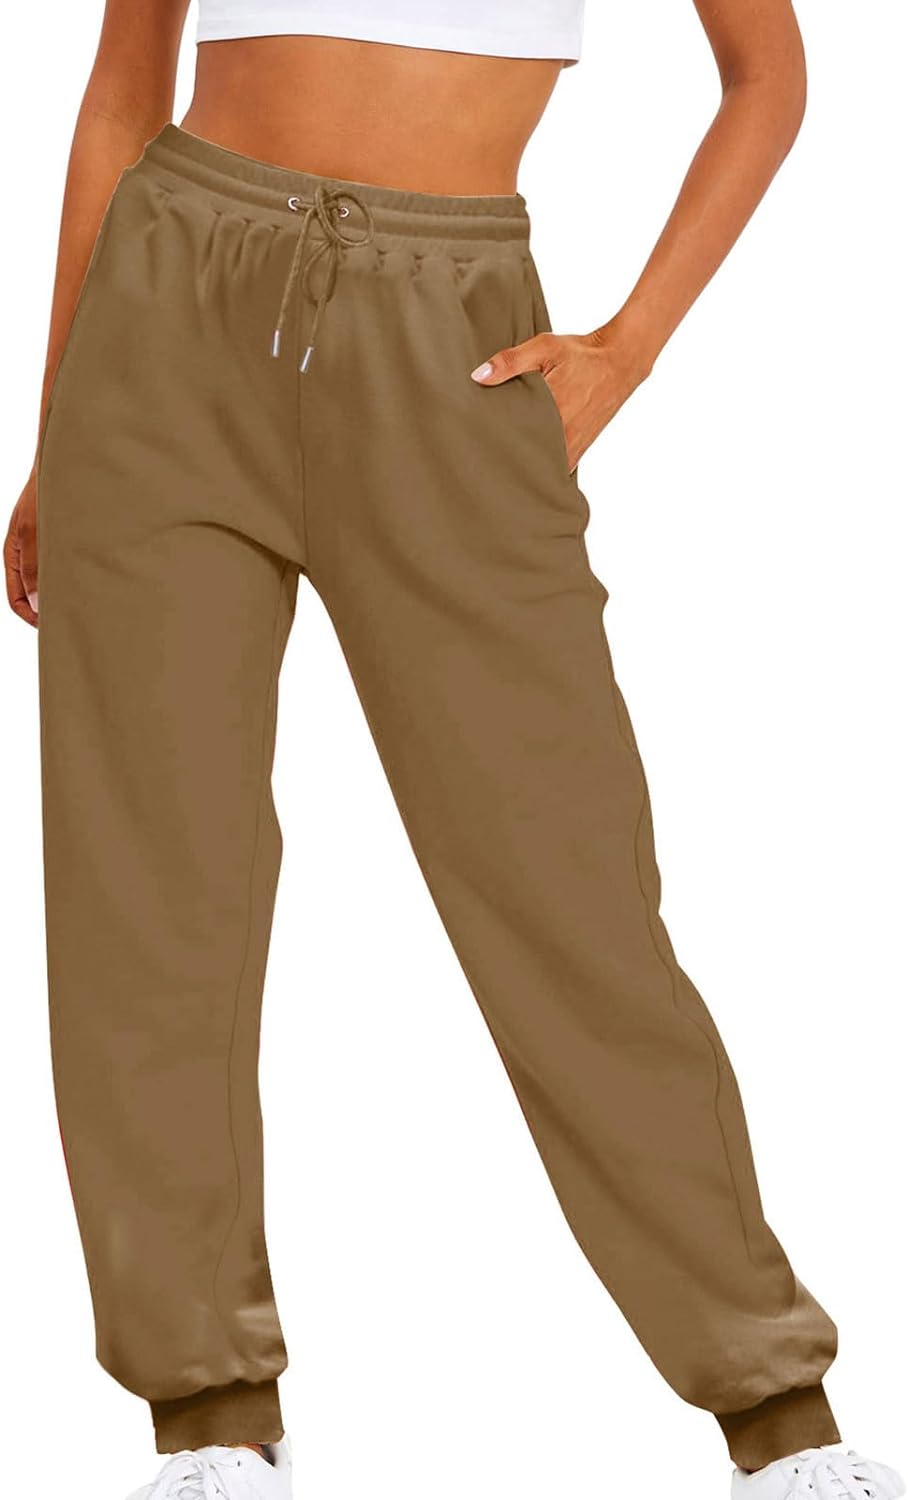 LRMQS Sweatpants Women Drawstring Elastic Waist Joggers Pants with Pockets Cinch Bottom Trendy Casual Jogger Trousers